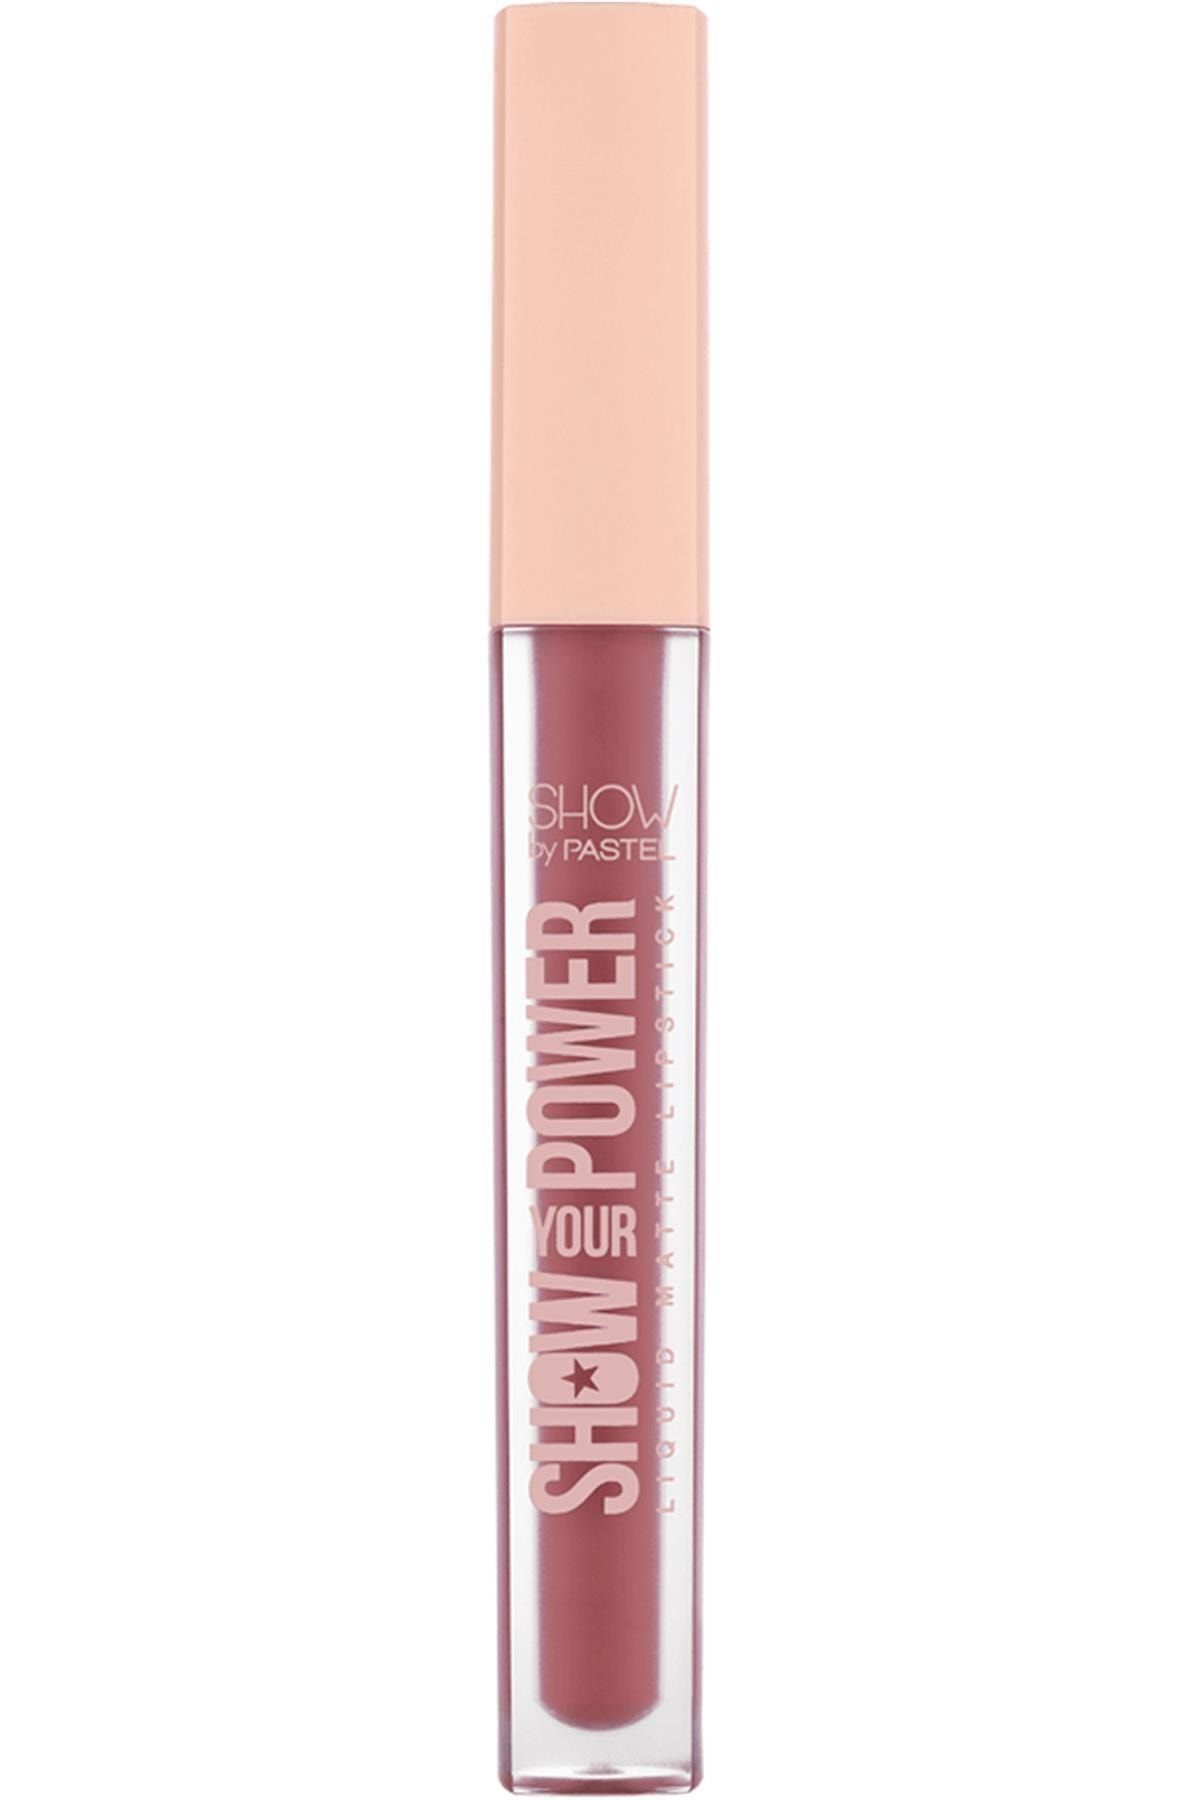 Show by Pastel Marka: Show Your Power Liquid Lipstick No: 601 Kategori: Dudak Parlatıcısı